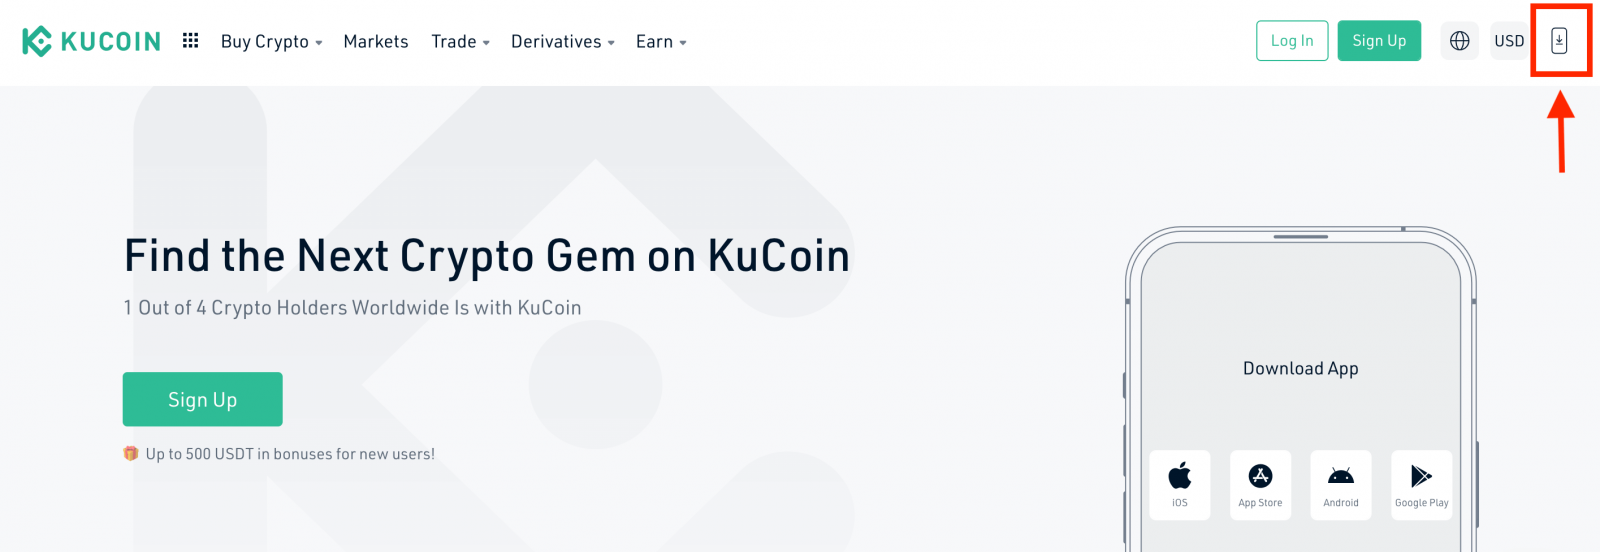 KuCoin에 거래 계좌를 개설하고 등록하는 방법